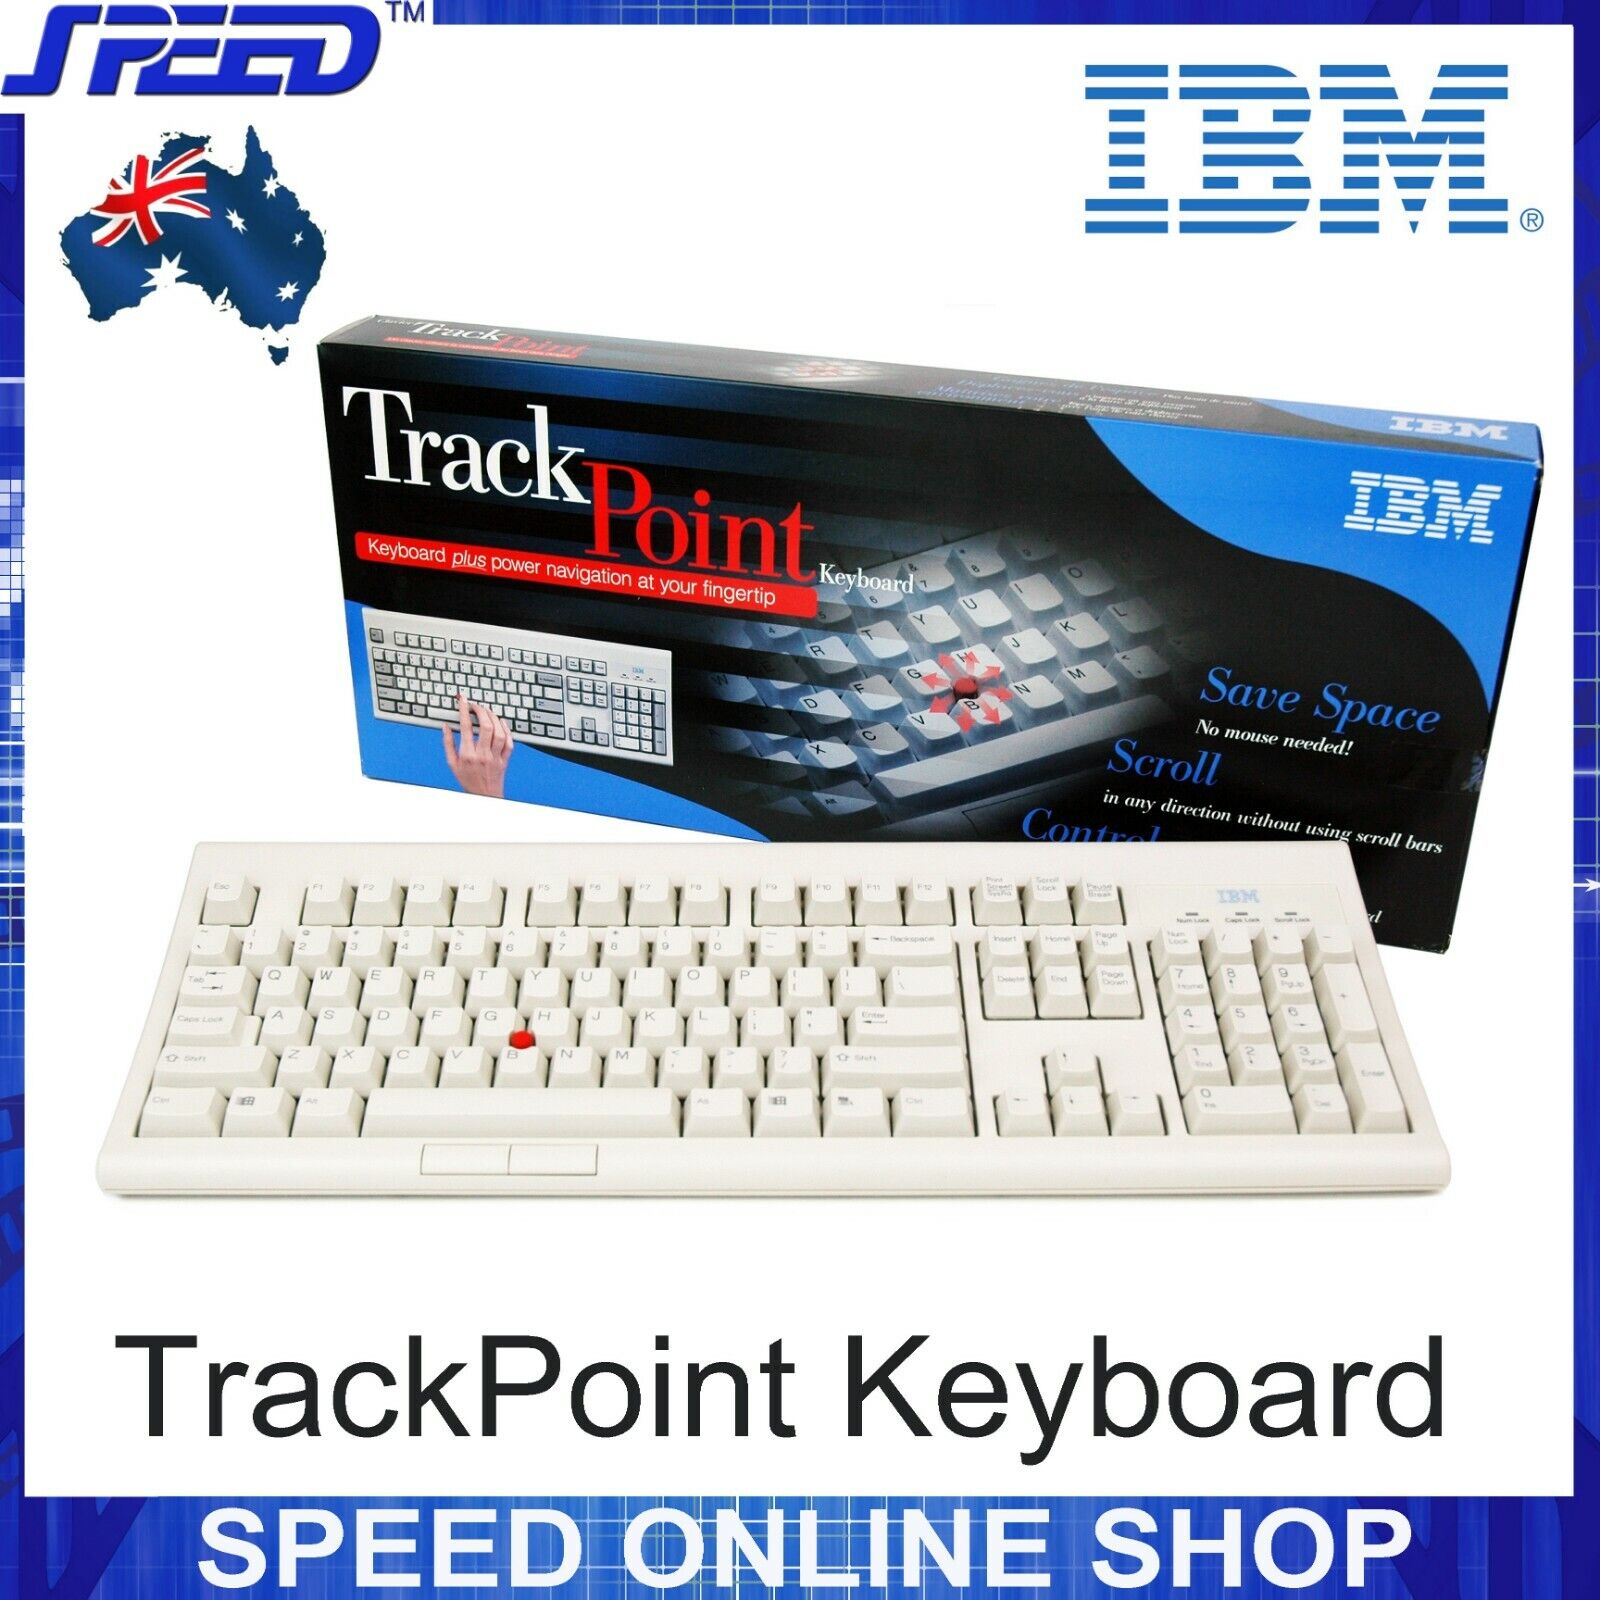 IBM KPD8923 Trackpoint PC Keyboard -01K1219 / 01K1259 / 04K0050 -(PS2 Interface)